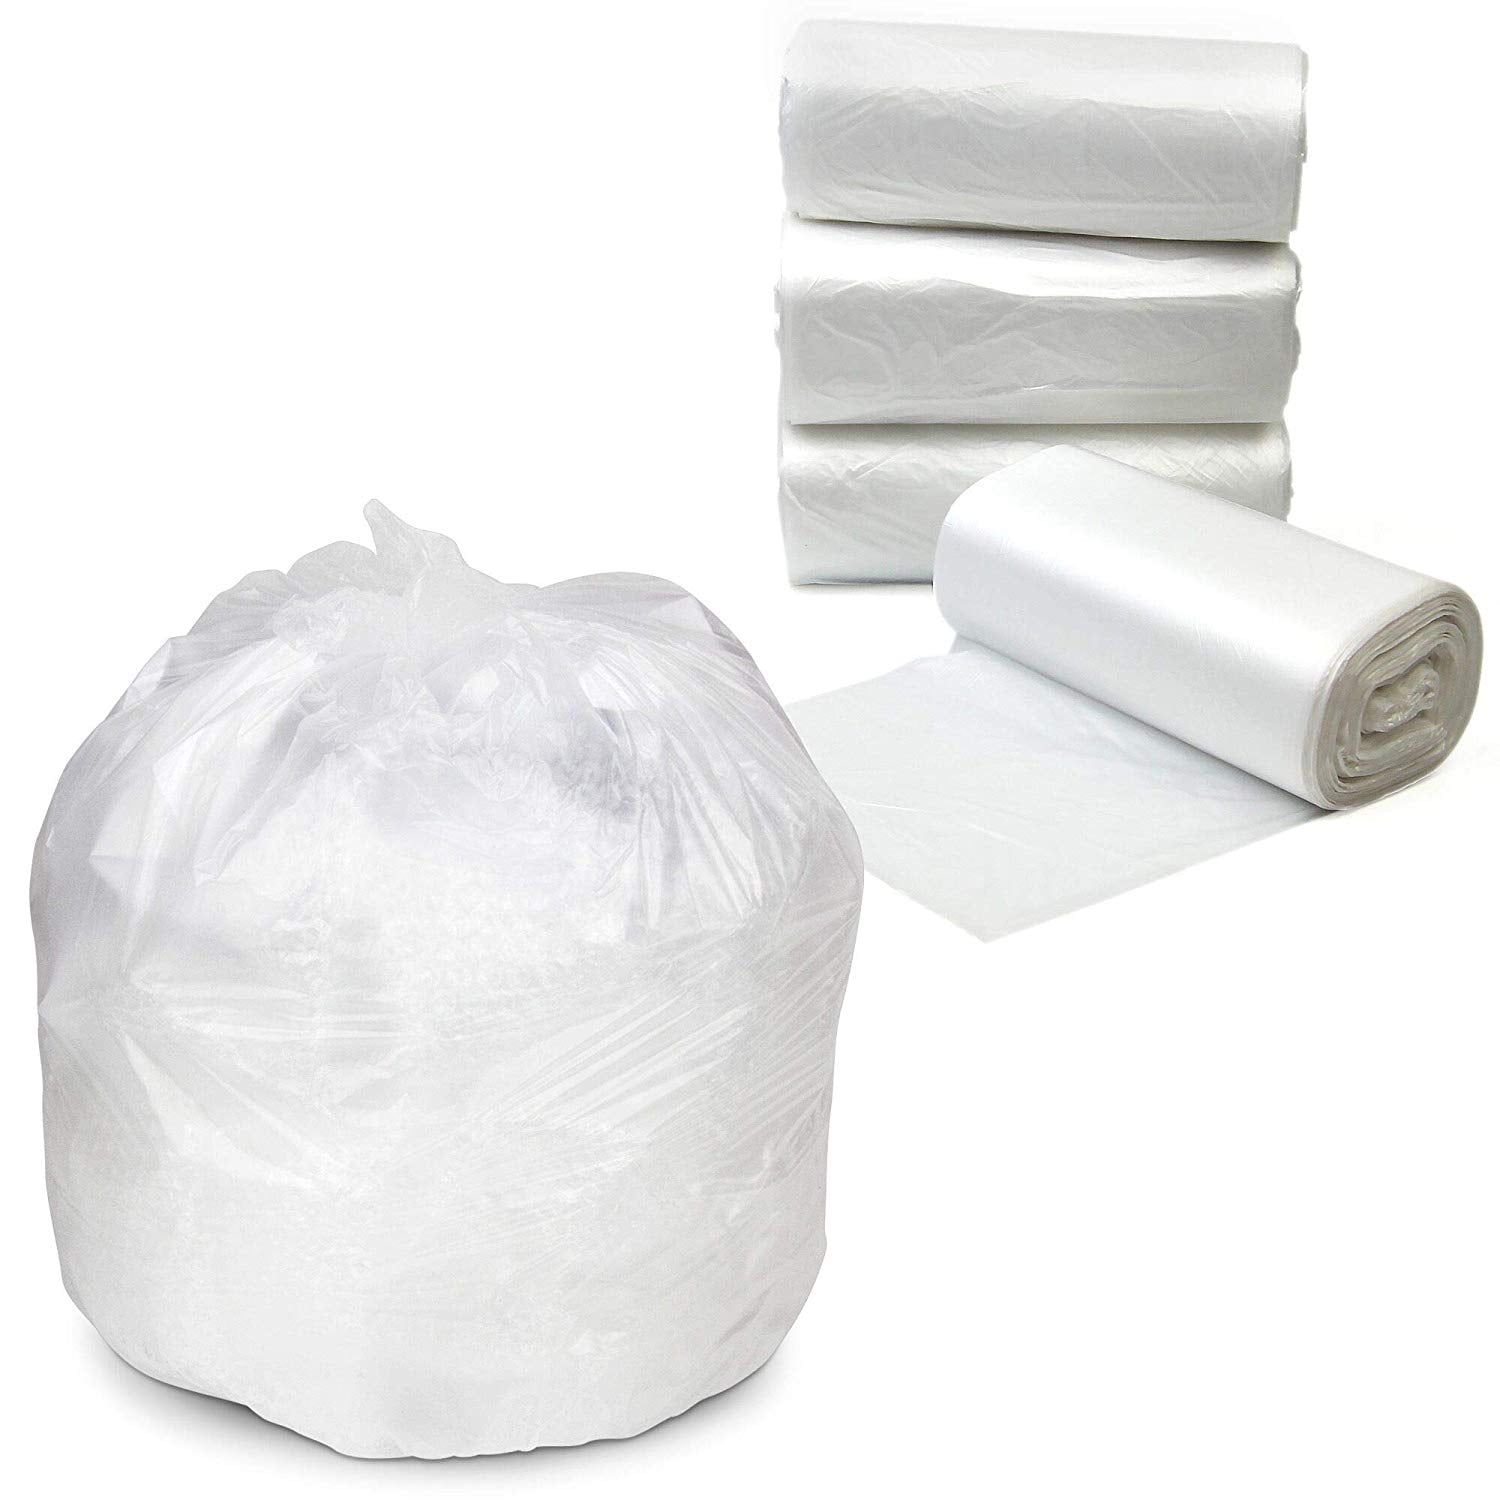 Fits 2.6 Gallon Bins Wastebasket Liners for Home 10 Liter Small Trash Bin Bags Bathroom 90 Count Garbage Bags Bathroom Bin liners Office